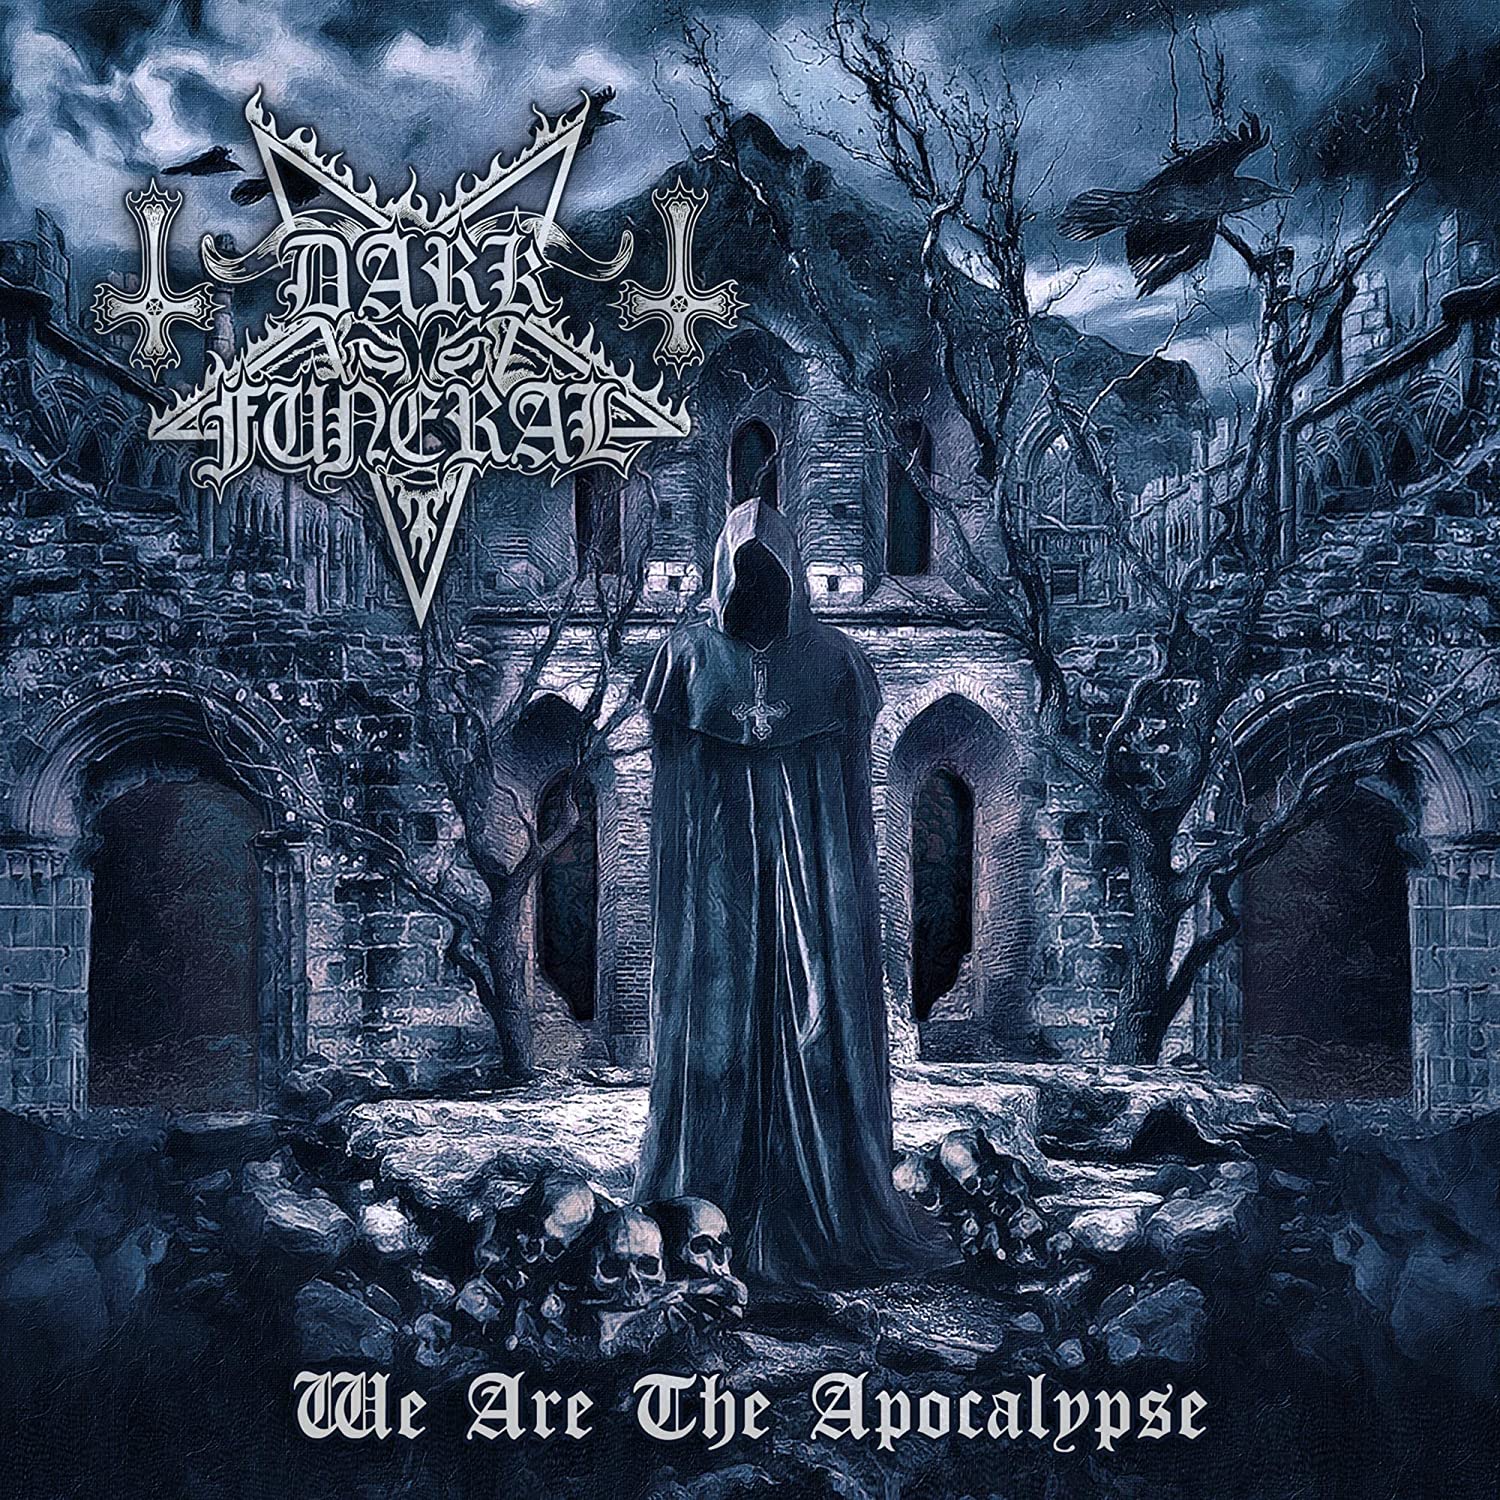 Dark Funeral - "We Are The Apocalypse" - 2022